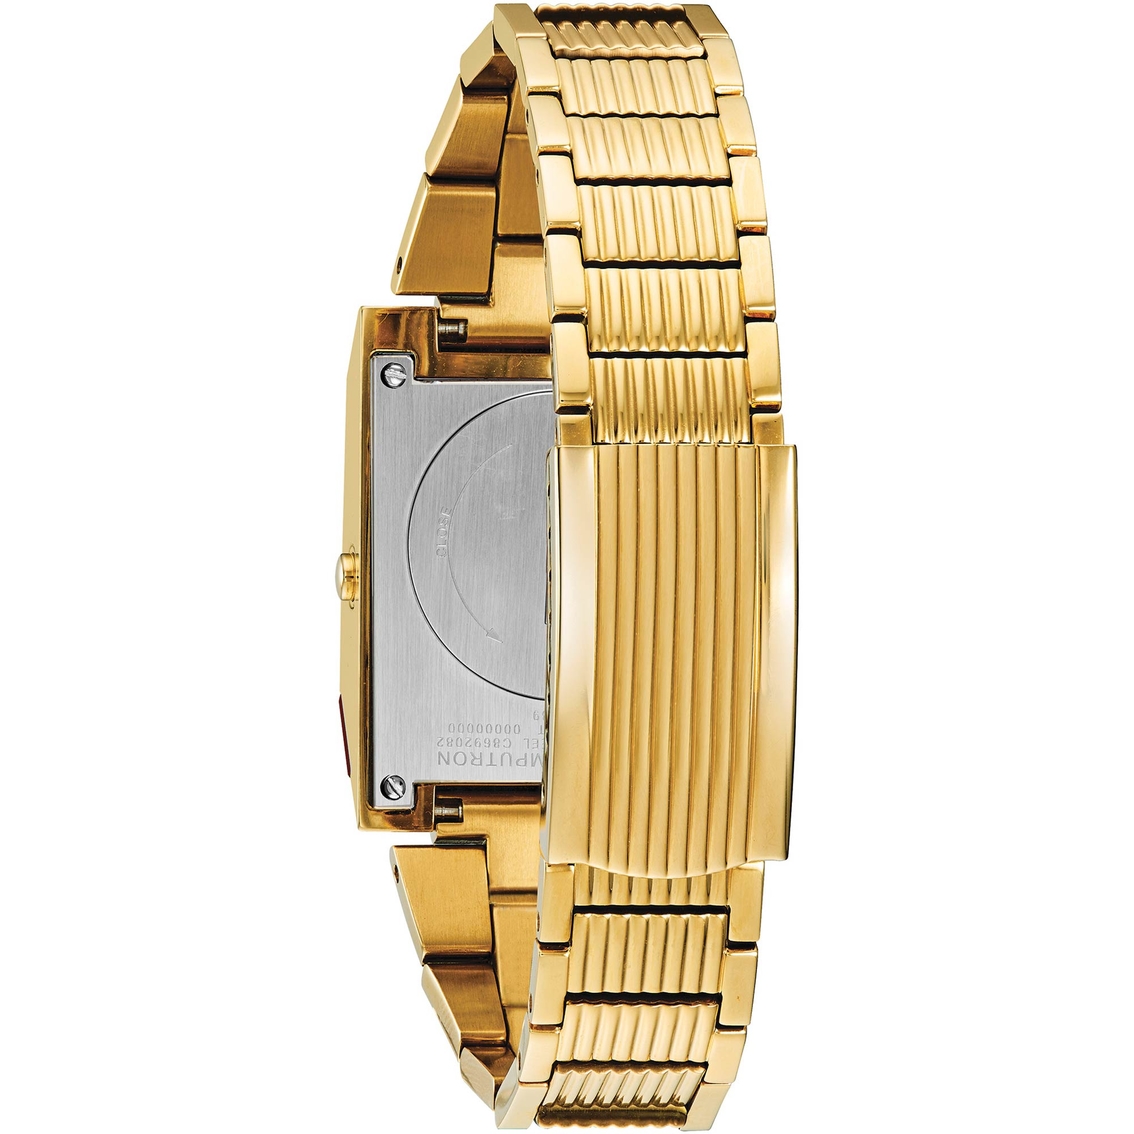 Bulova Men's Computron Gold Stainless Steel Bracelet Watch 97C110 - Image 2 of 3